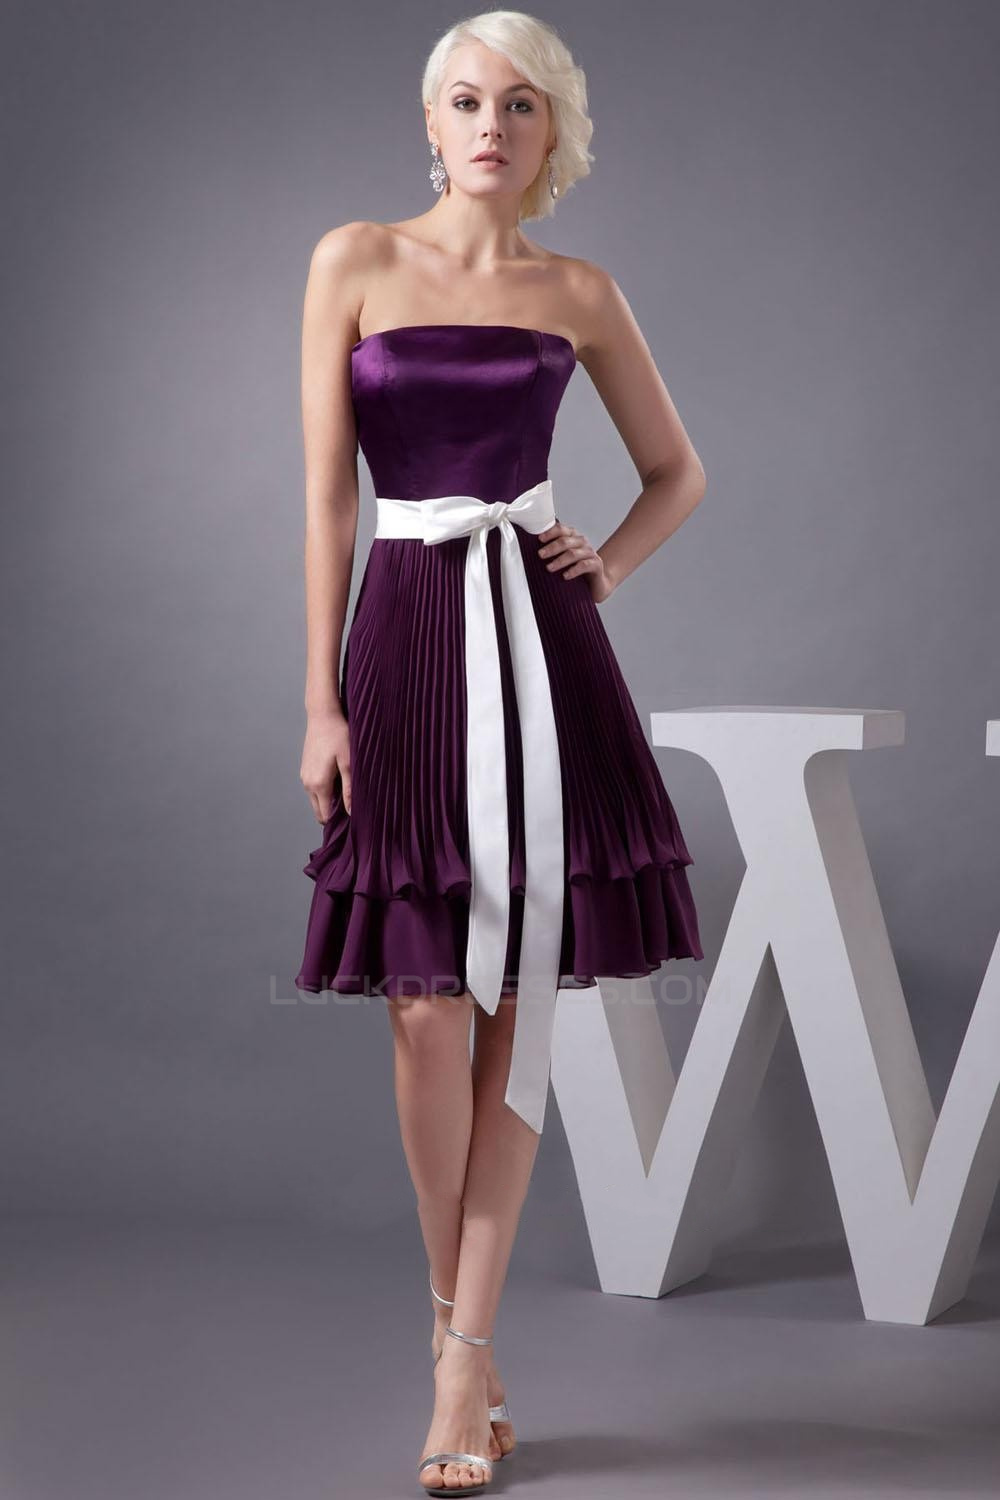 purple dresses for weddings knee length